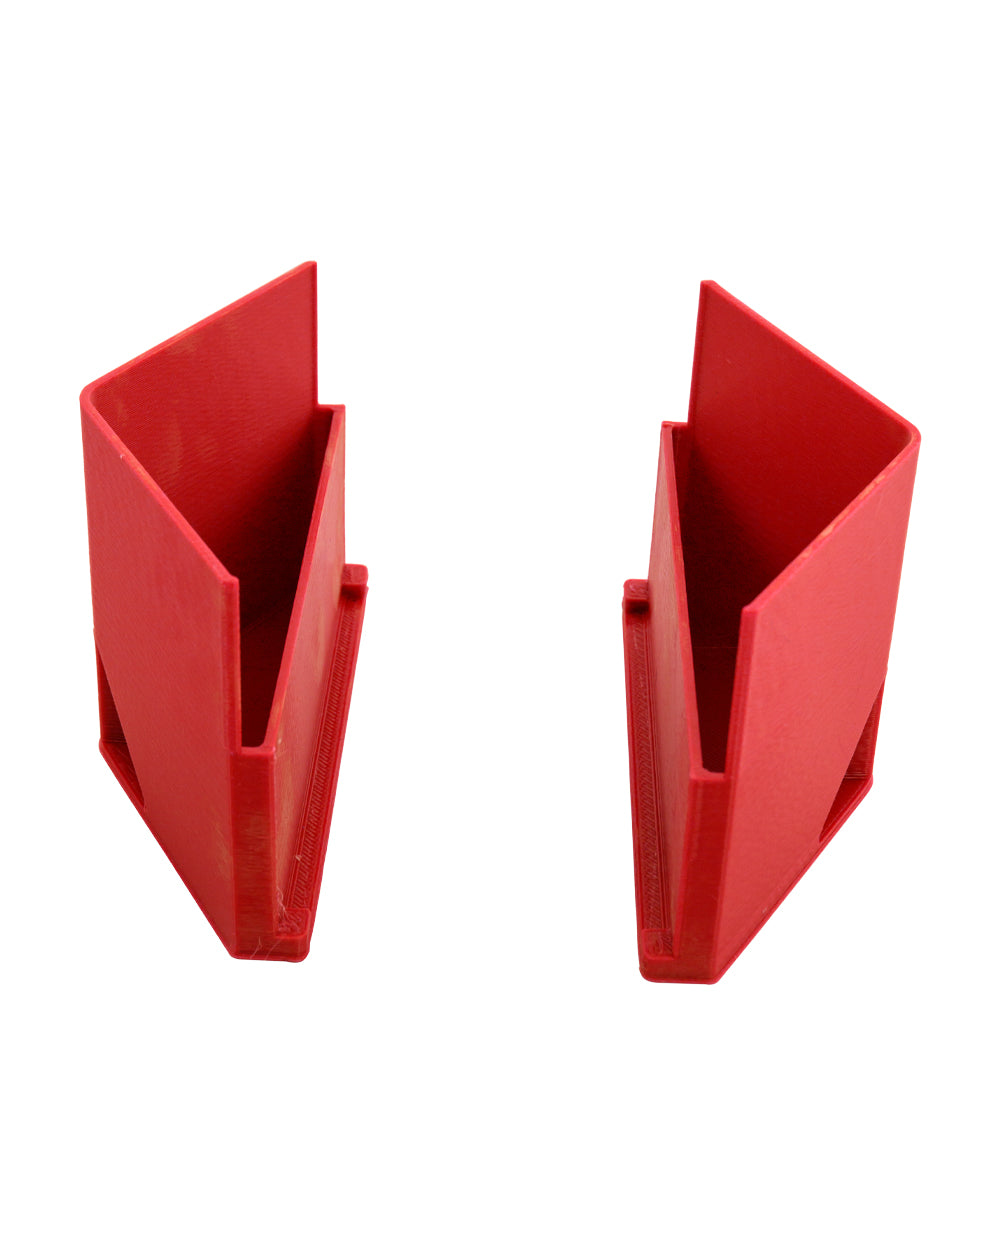 KING KONE | Red Vibration Pre-Rolled Cones Filling Machine 84/98/109mm | Fill 169 Cones Per Run - 6